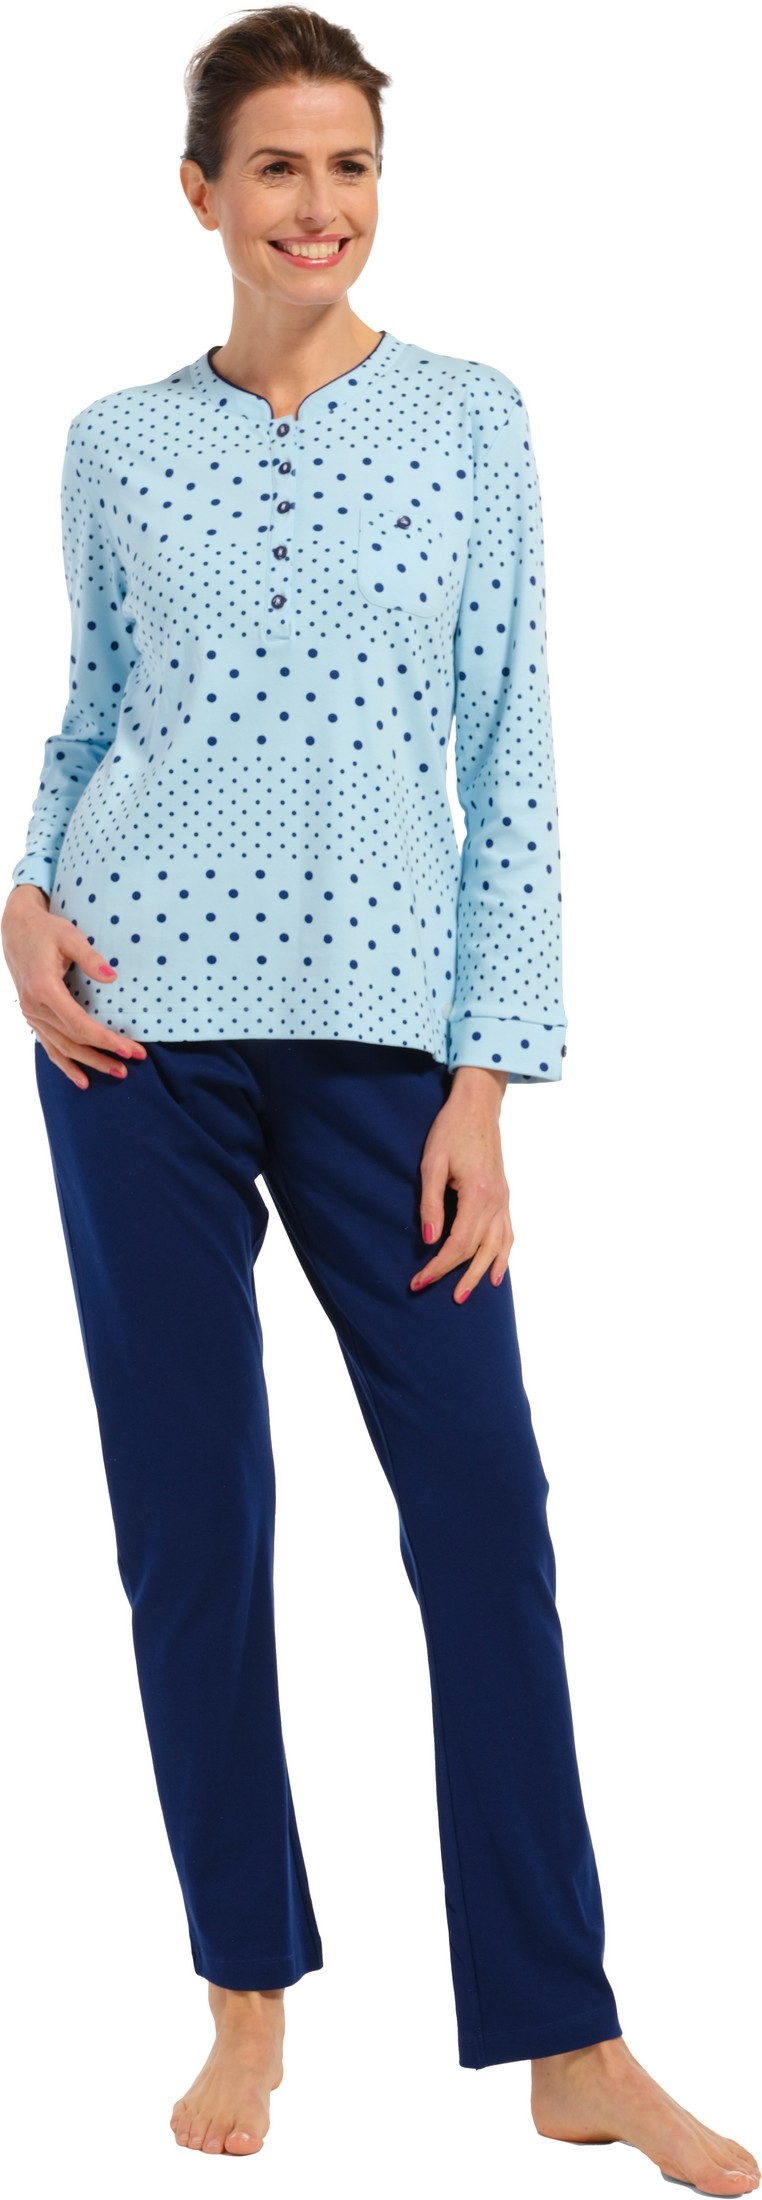 Pastunette dames pyjama 20232-162-4 - Blauw - 52